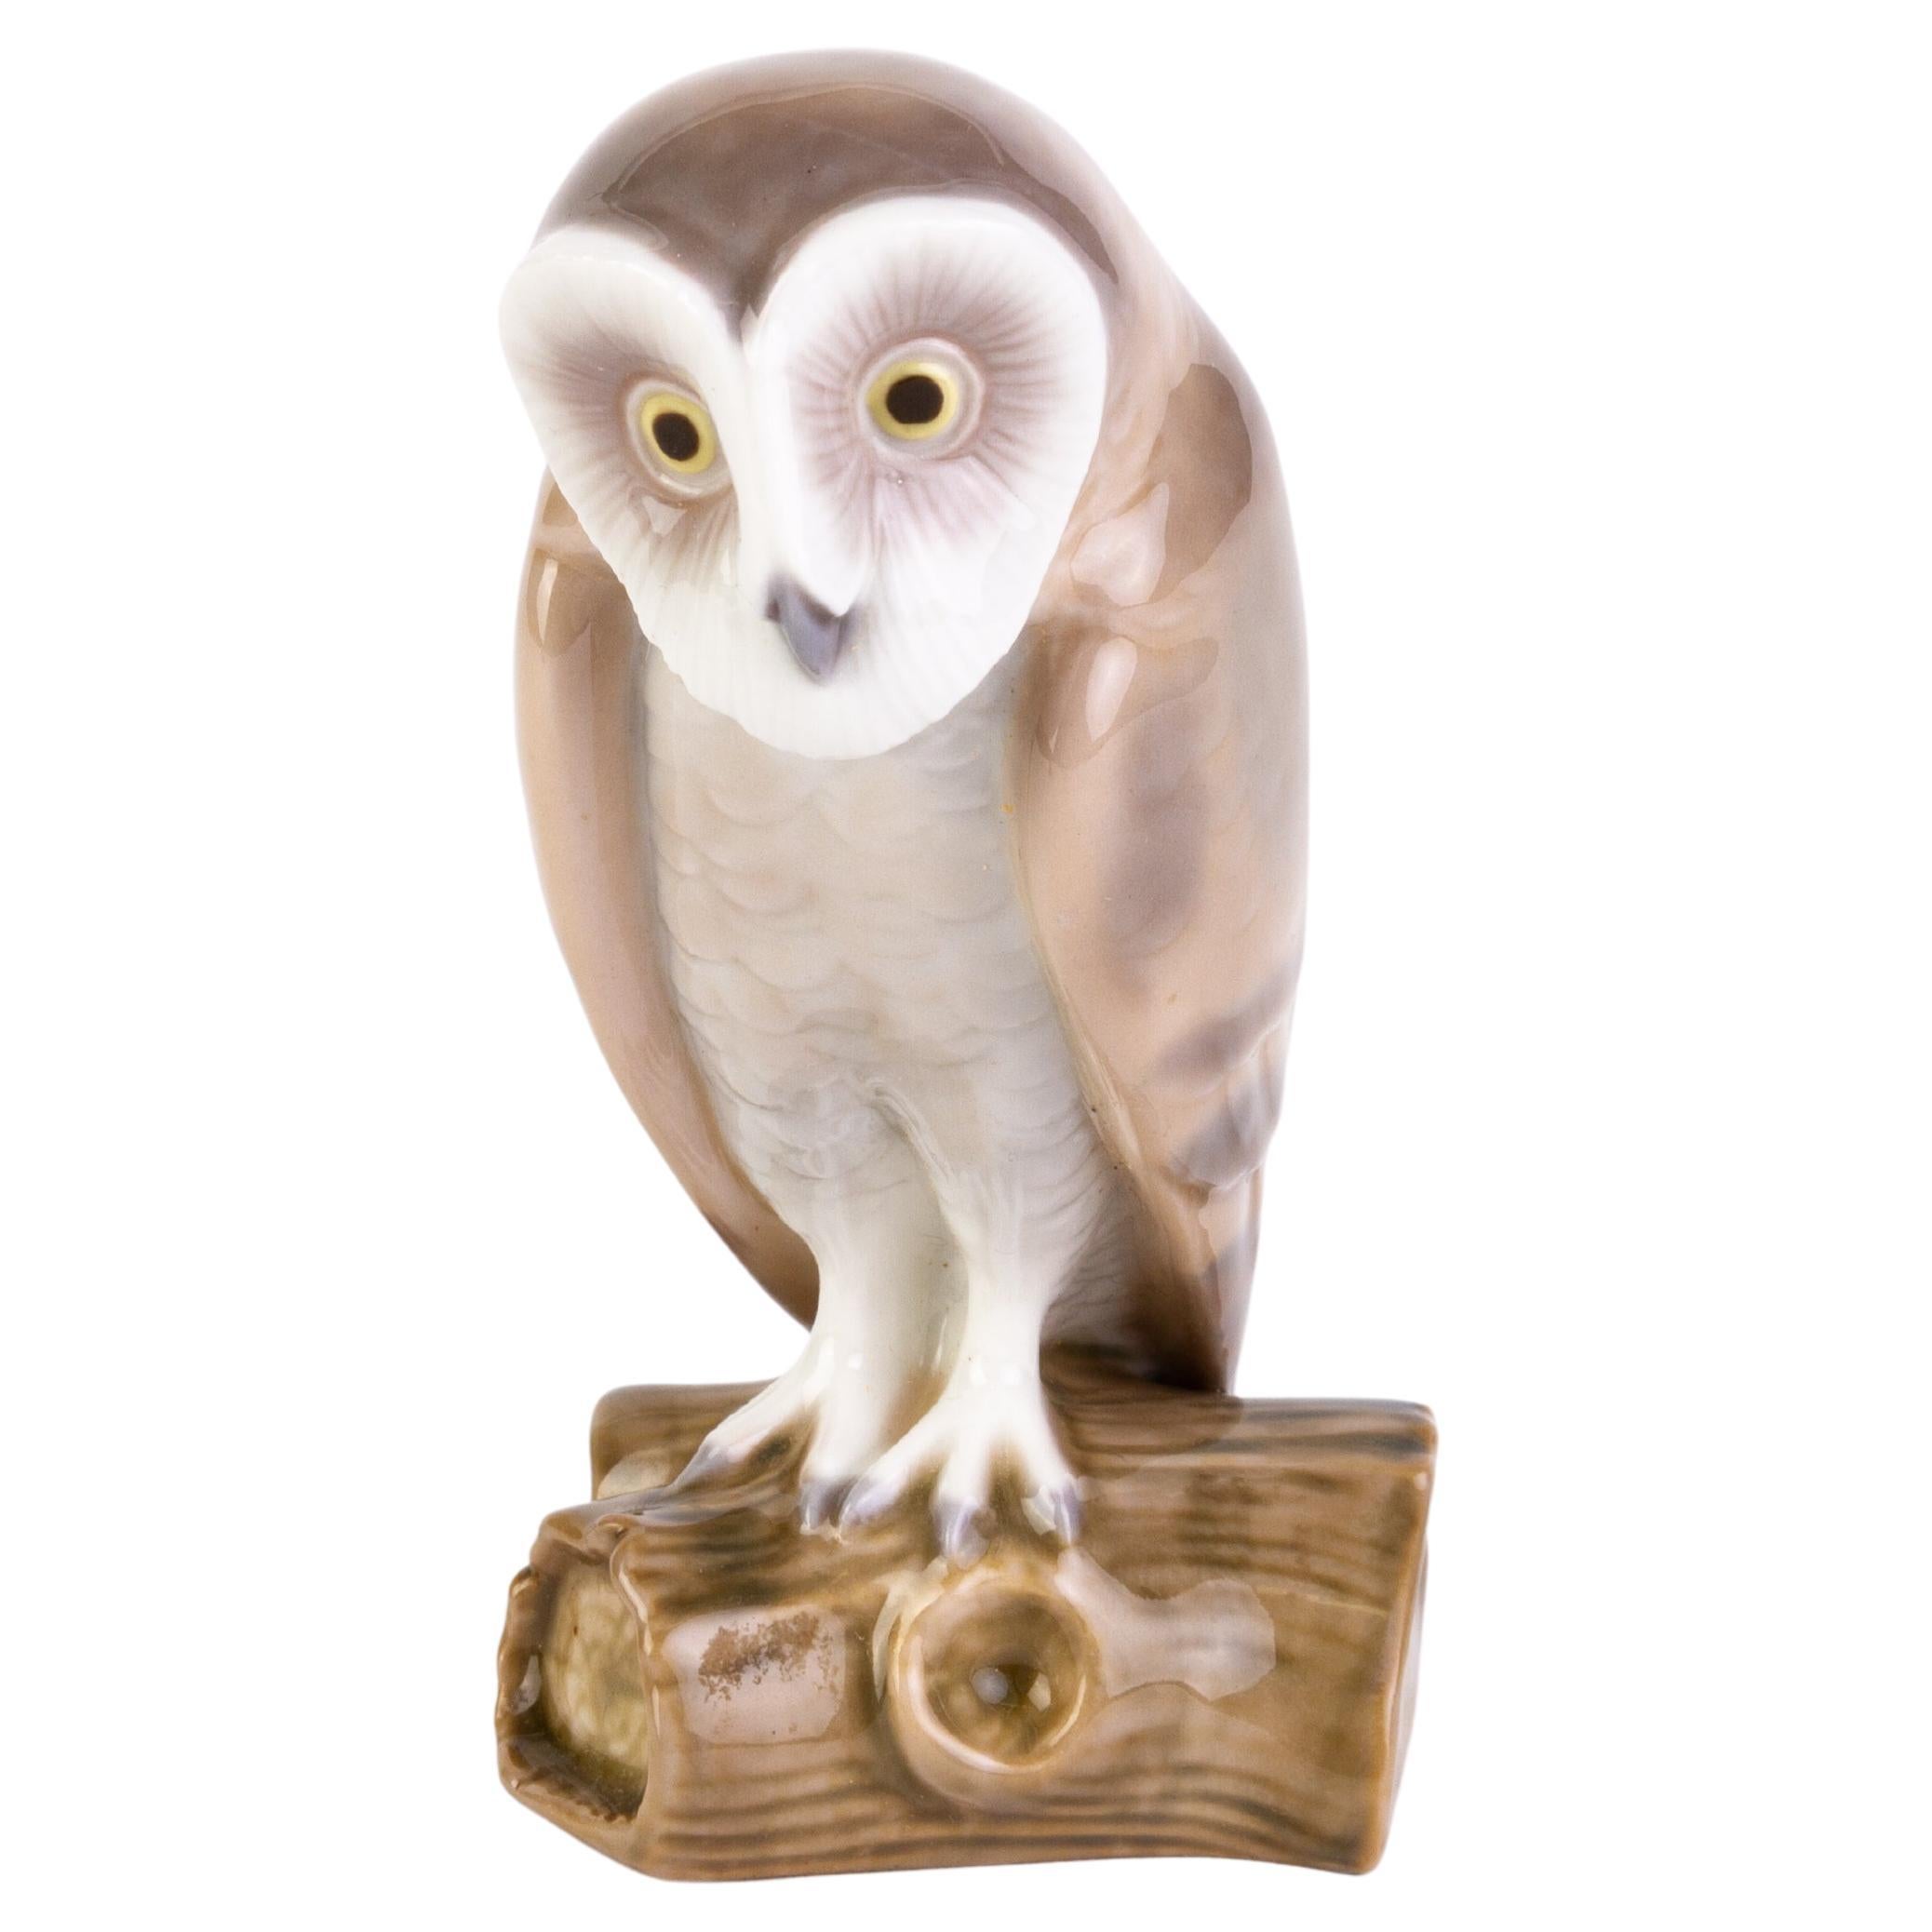 https://a.1stdibscdn.com/retired-lladro-fine-porcelain-sculpture-figure-group-barn-owl-5421-for-sale/f_90032/f_355110821690913308004/f_35511082_1690913308620_bg_processed.jpg